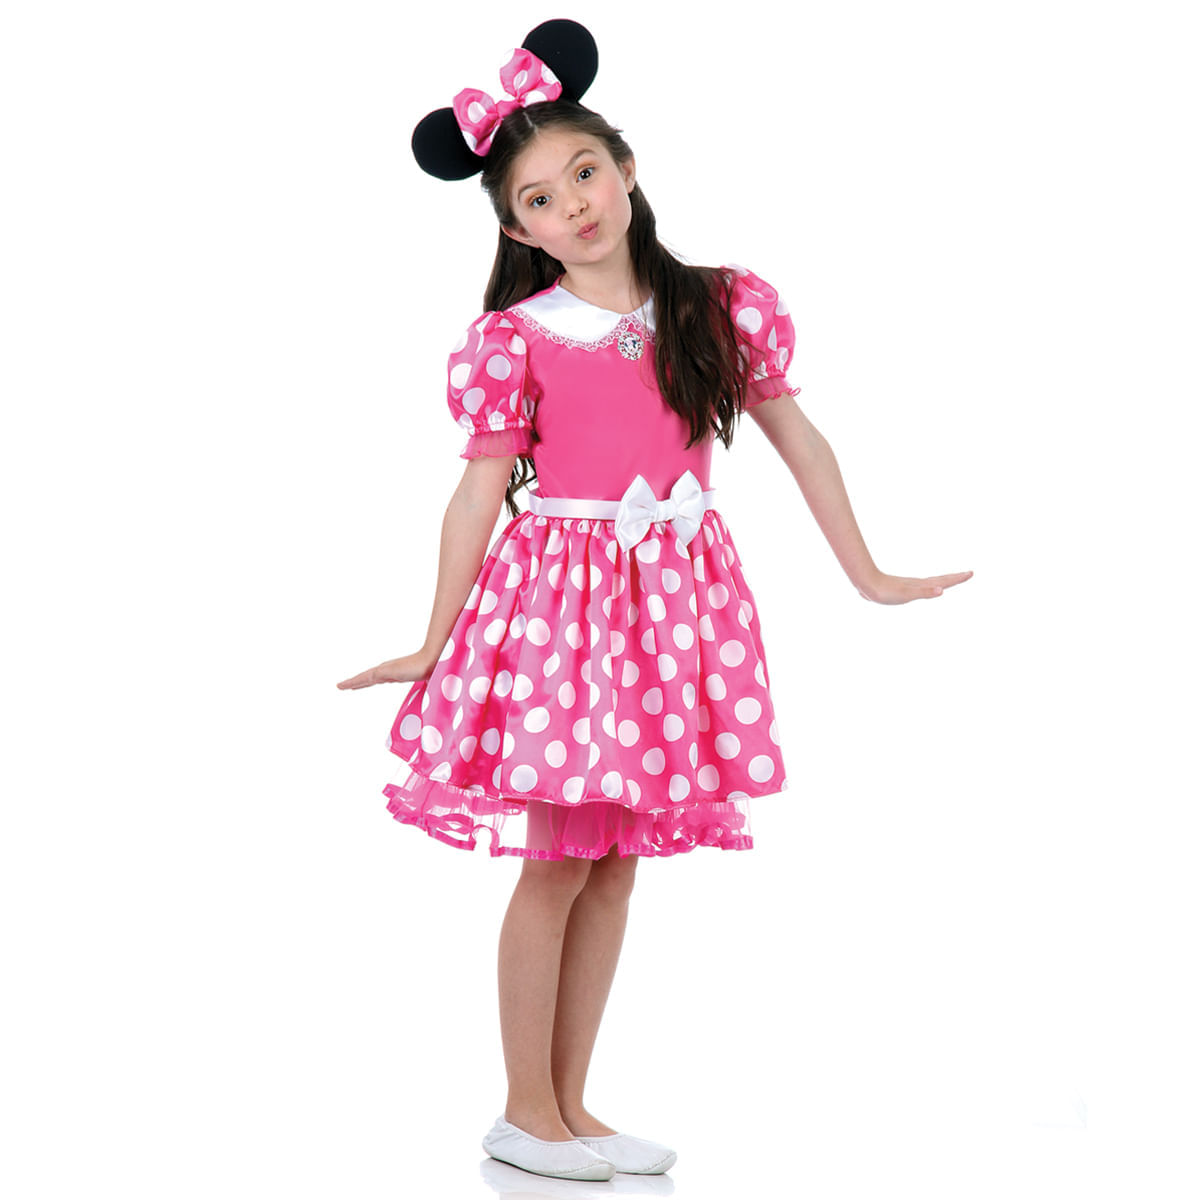 Fantasia Minnie Disney Infantil Rosa P / UNICA